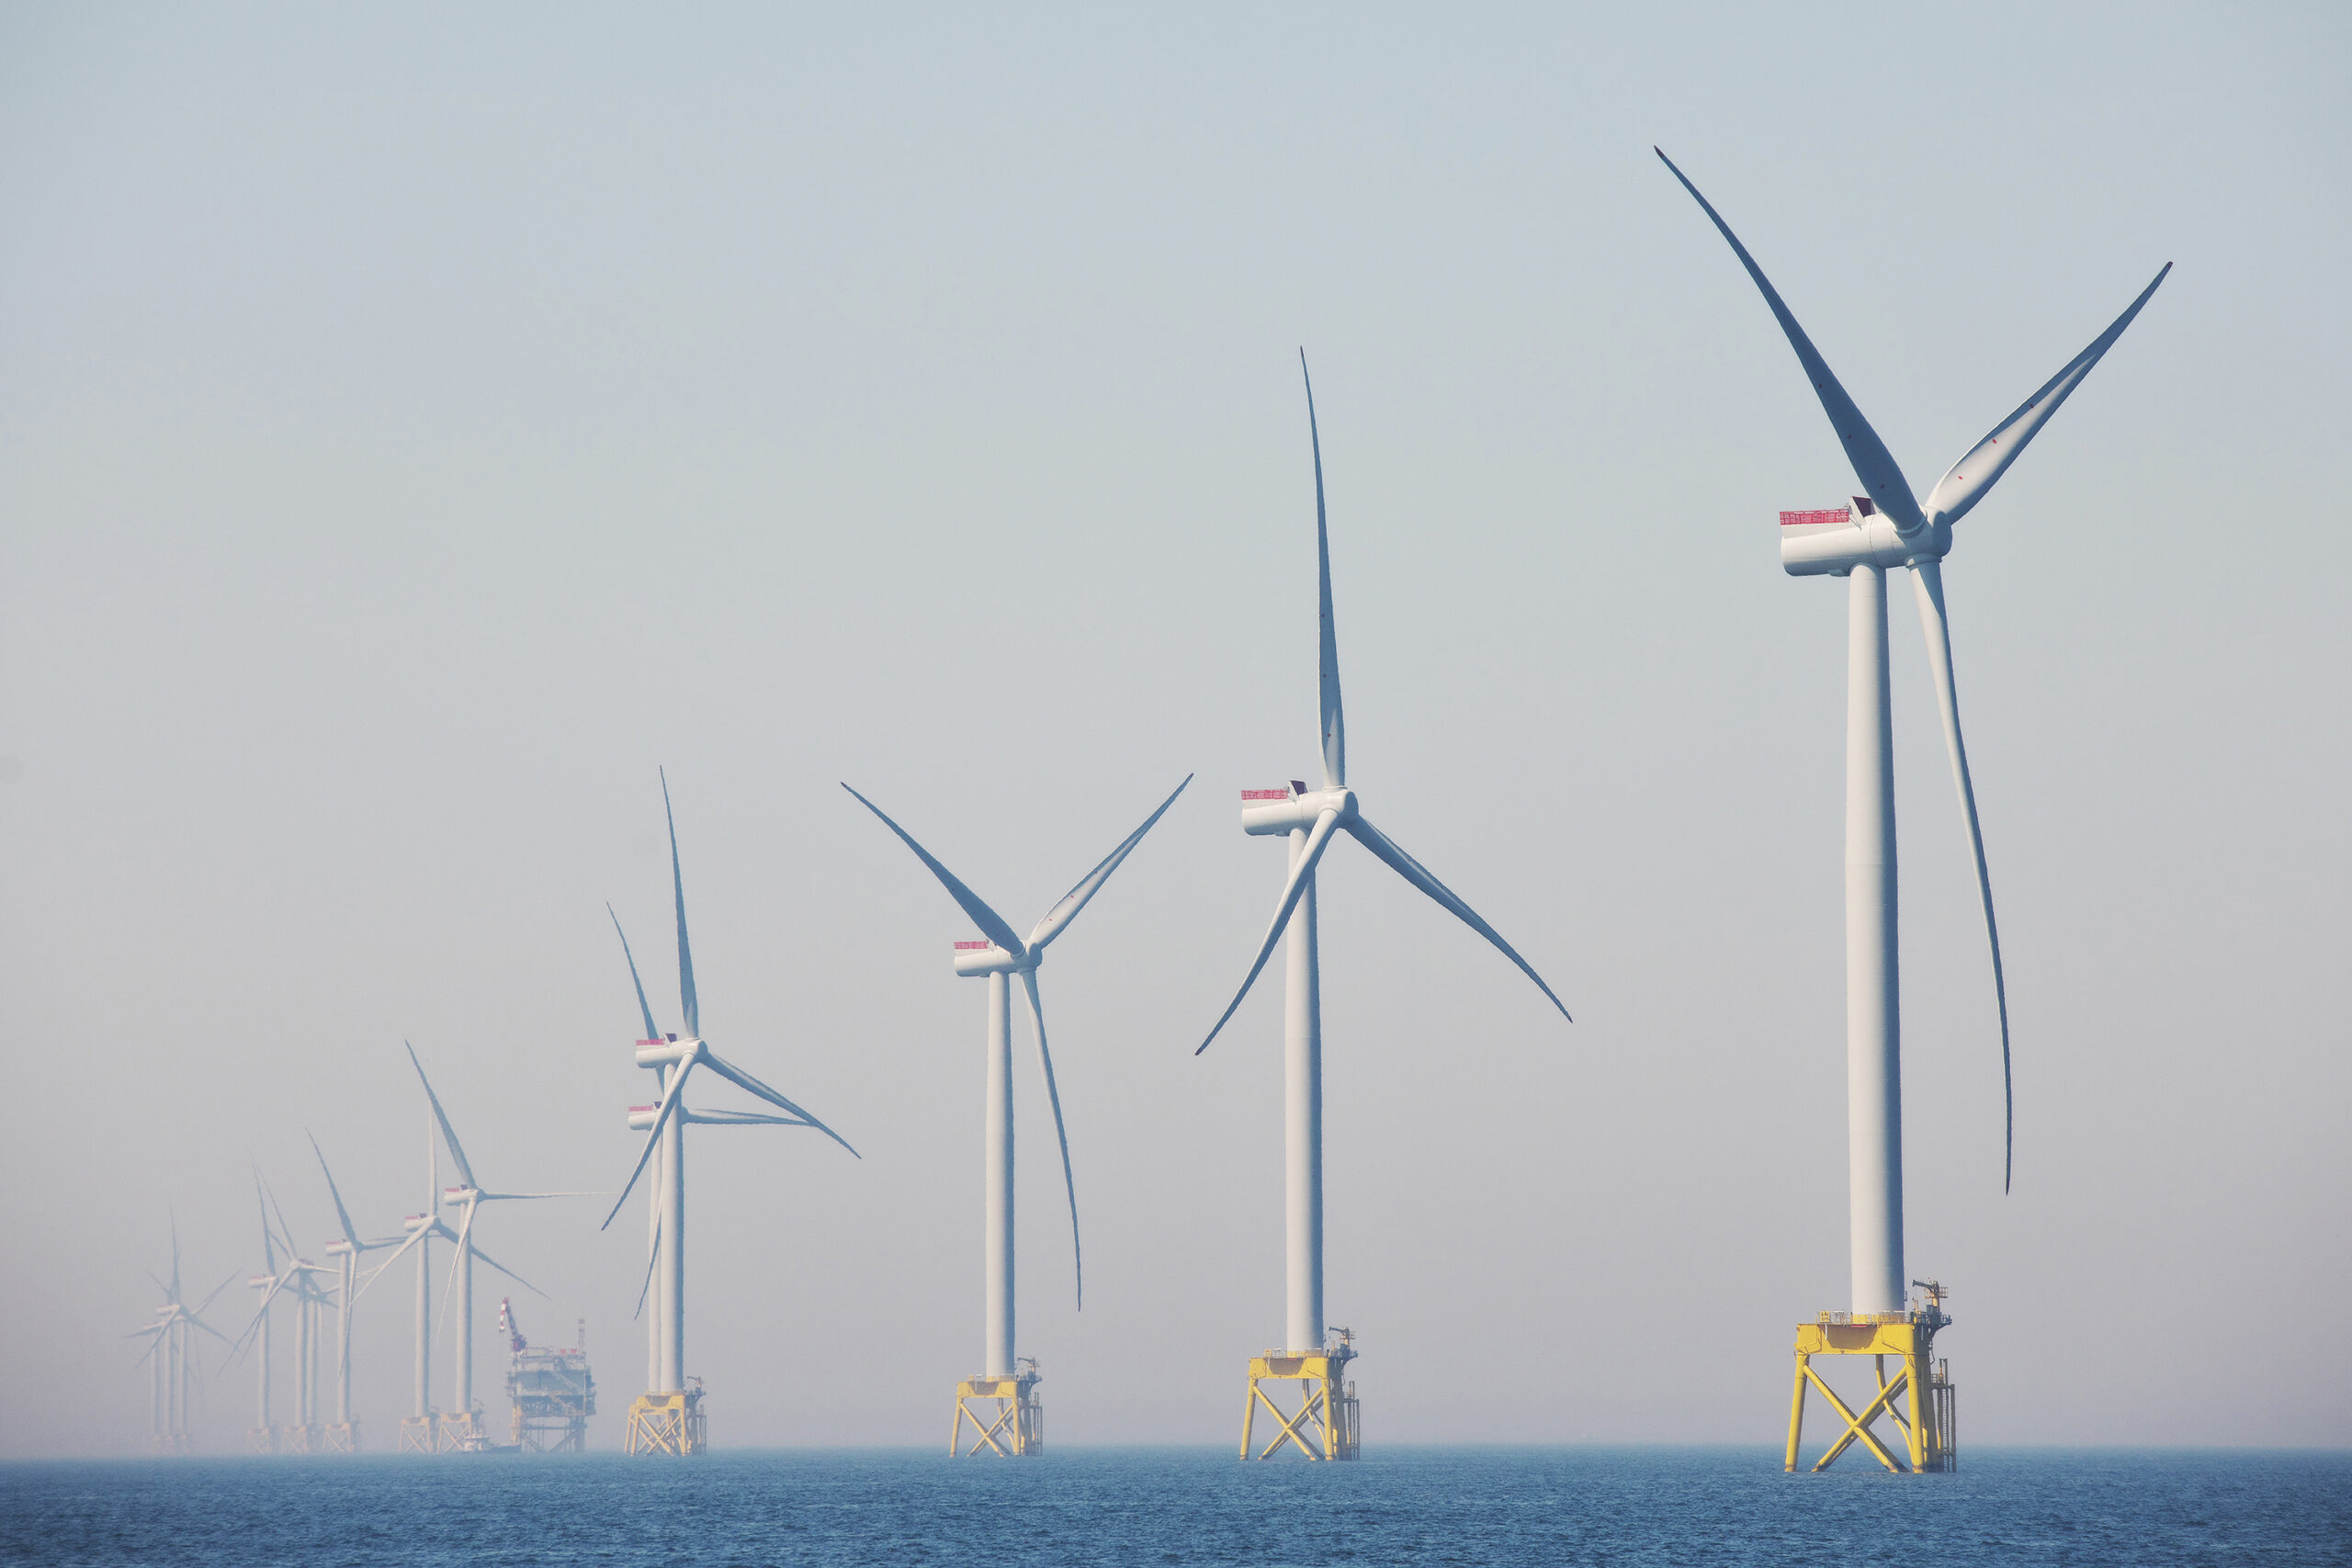 MEMBER NEWS: Marex celebrates East Anglia windfarm contract win